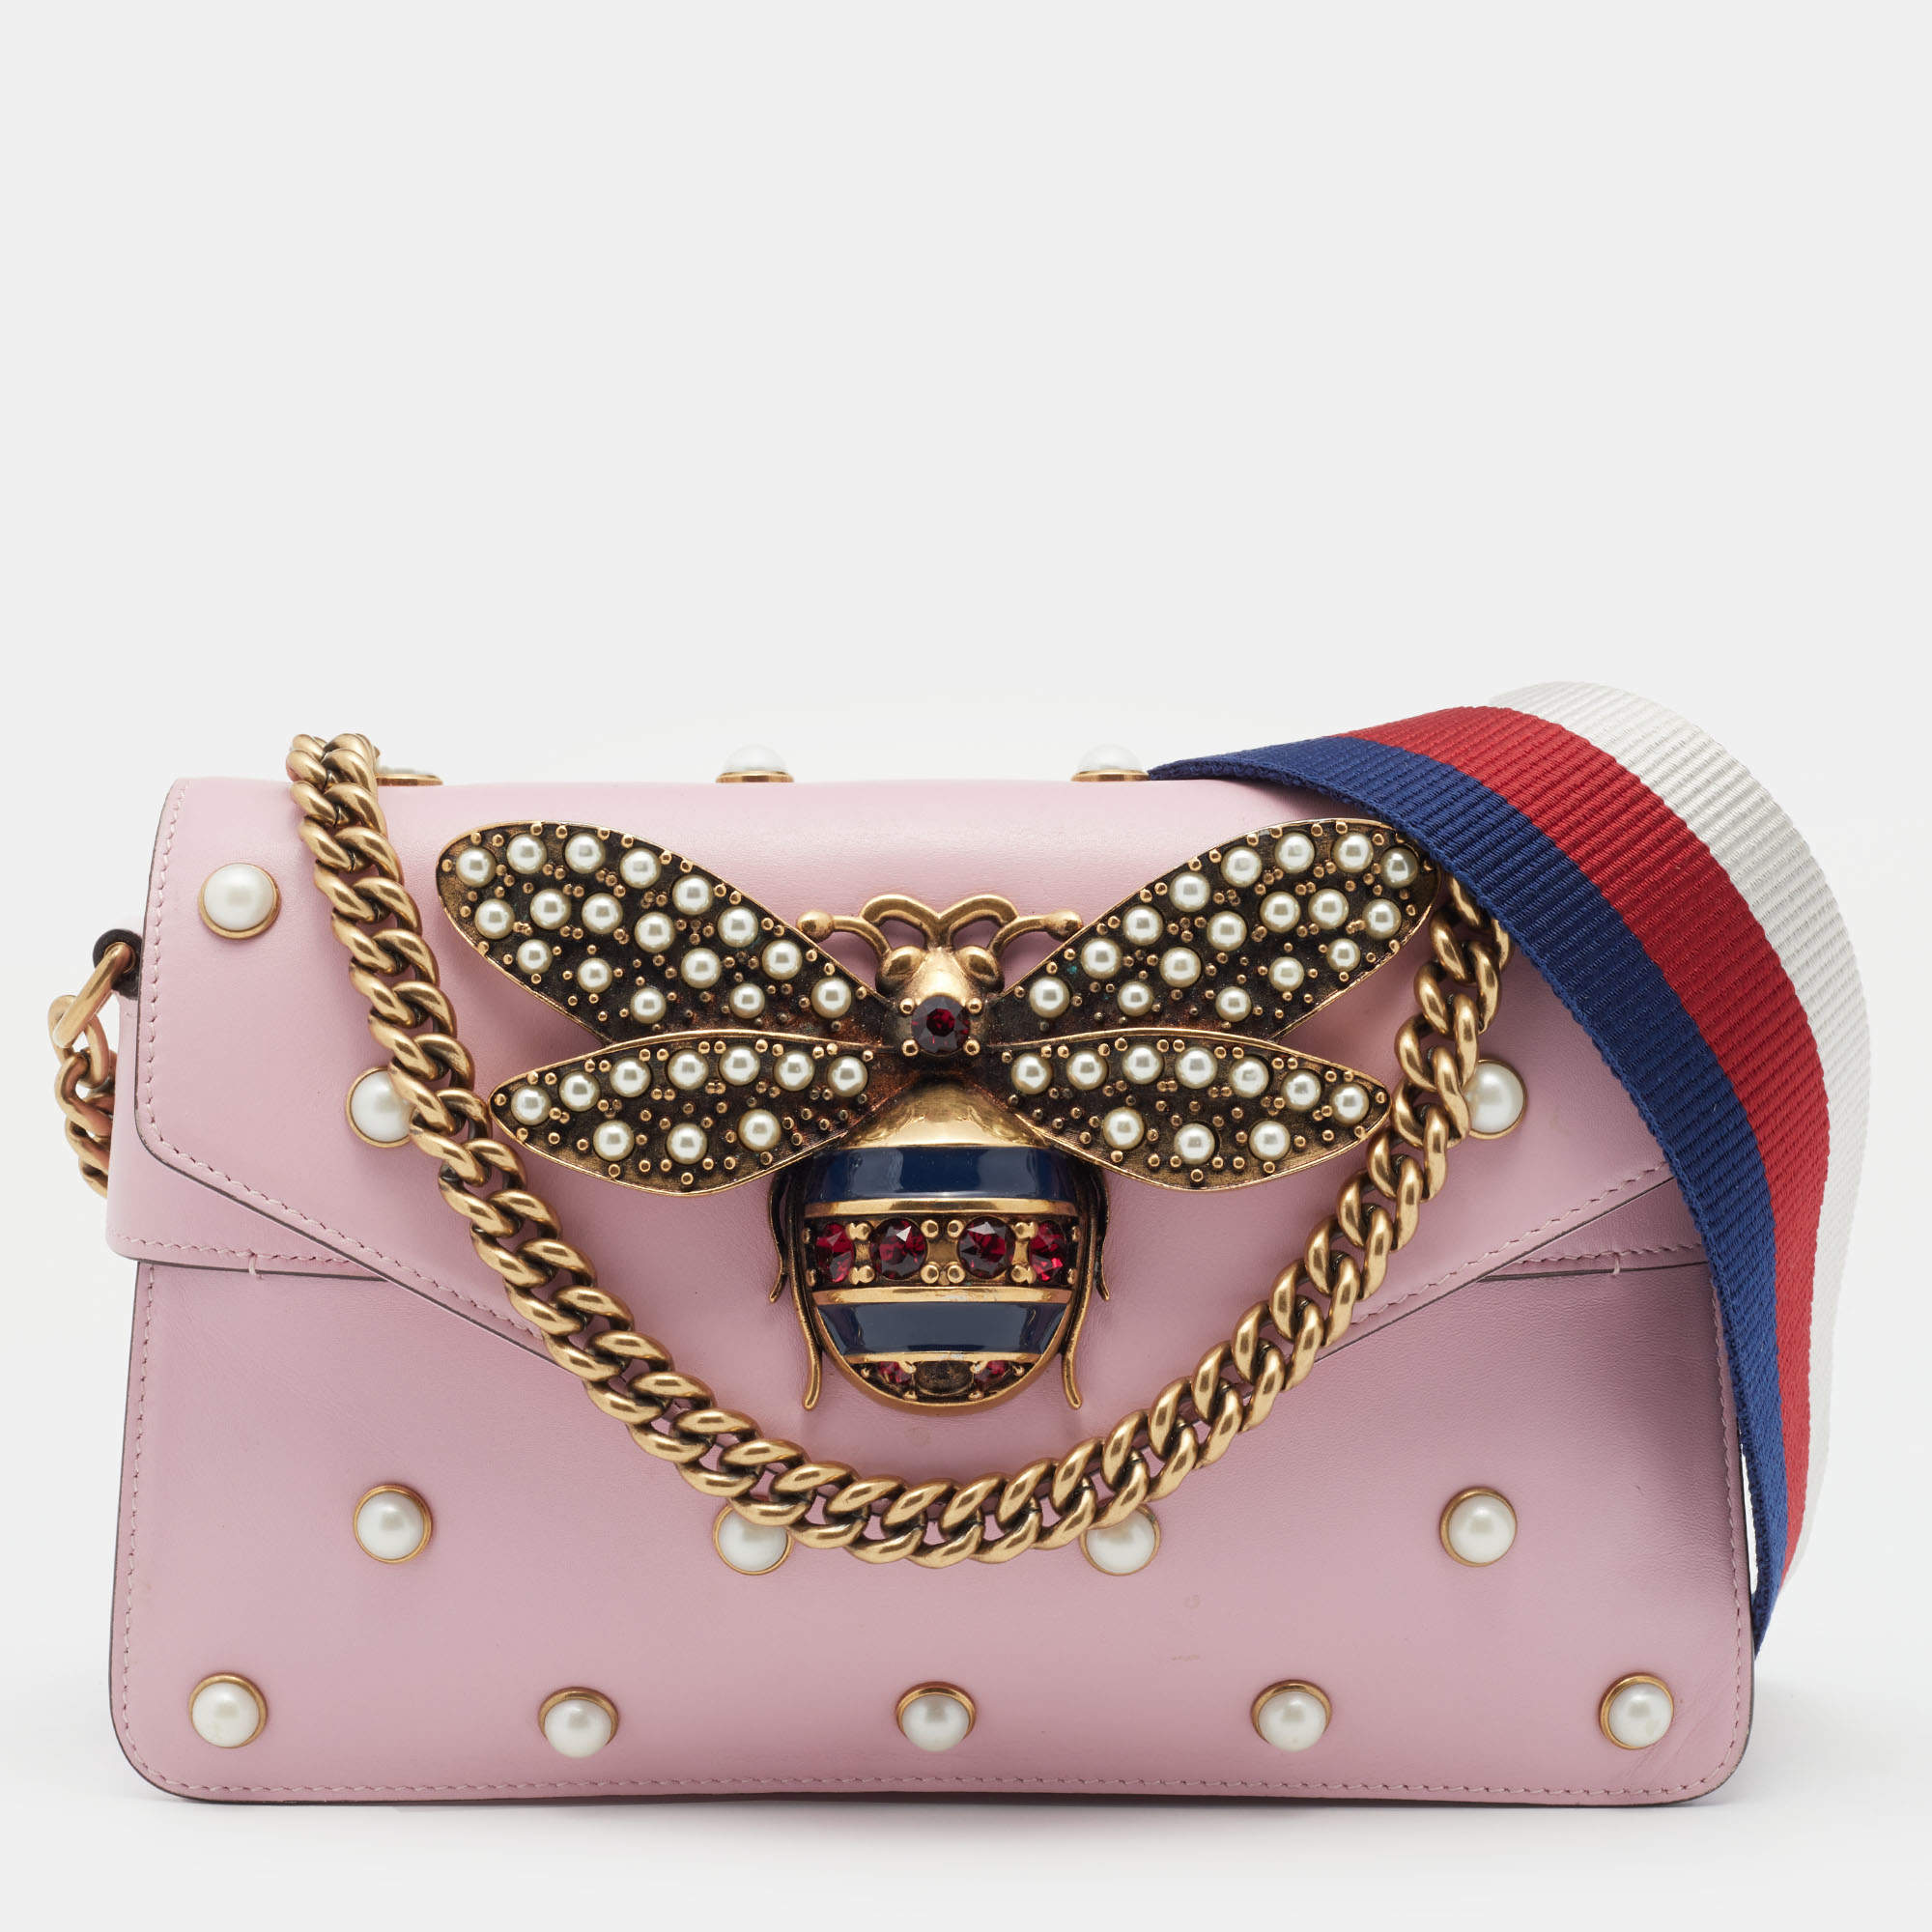 Gucci Interlocking GG Crossbody Bag in Soft Pink | Gucci crossbody bag, Pink  gucci purse, Gucci bag